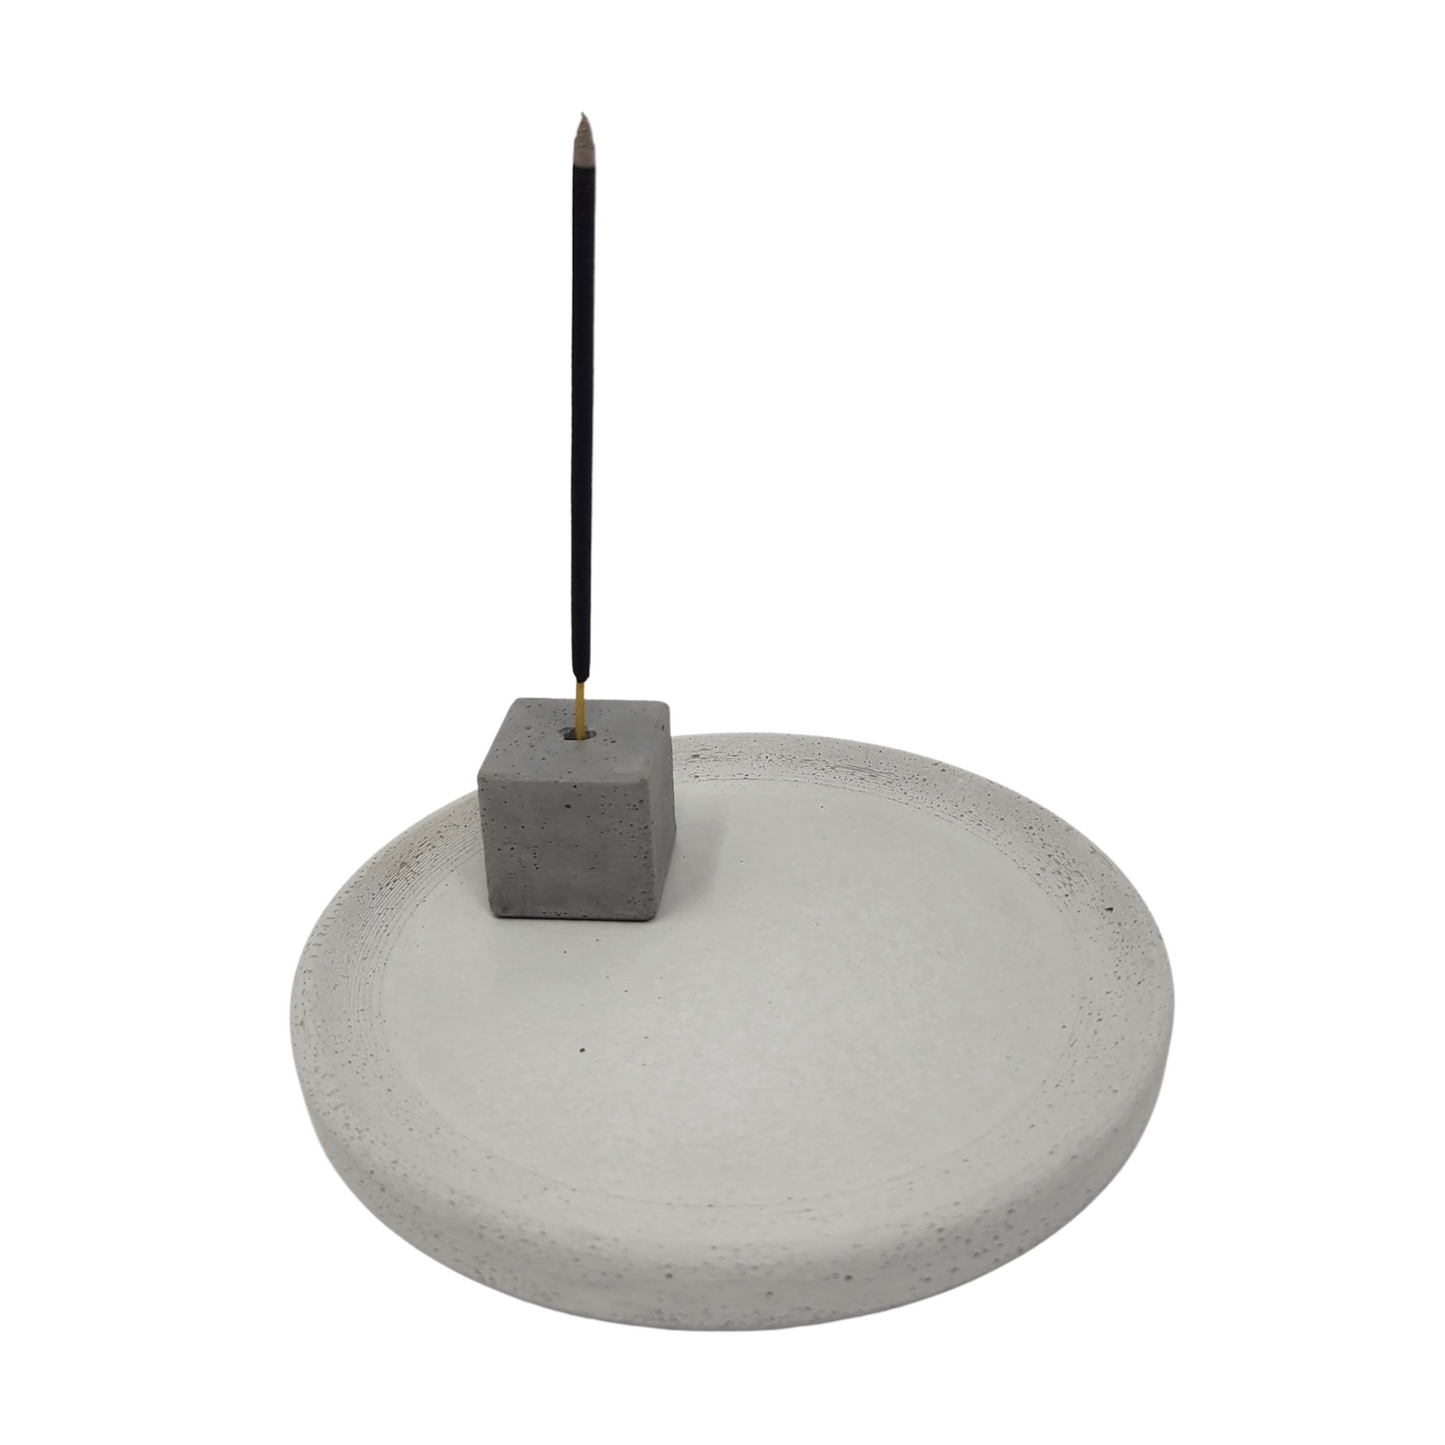 5" Incense Burner | Concrete Round Tray | Abalone